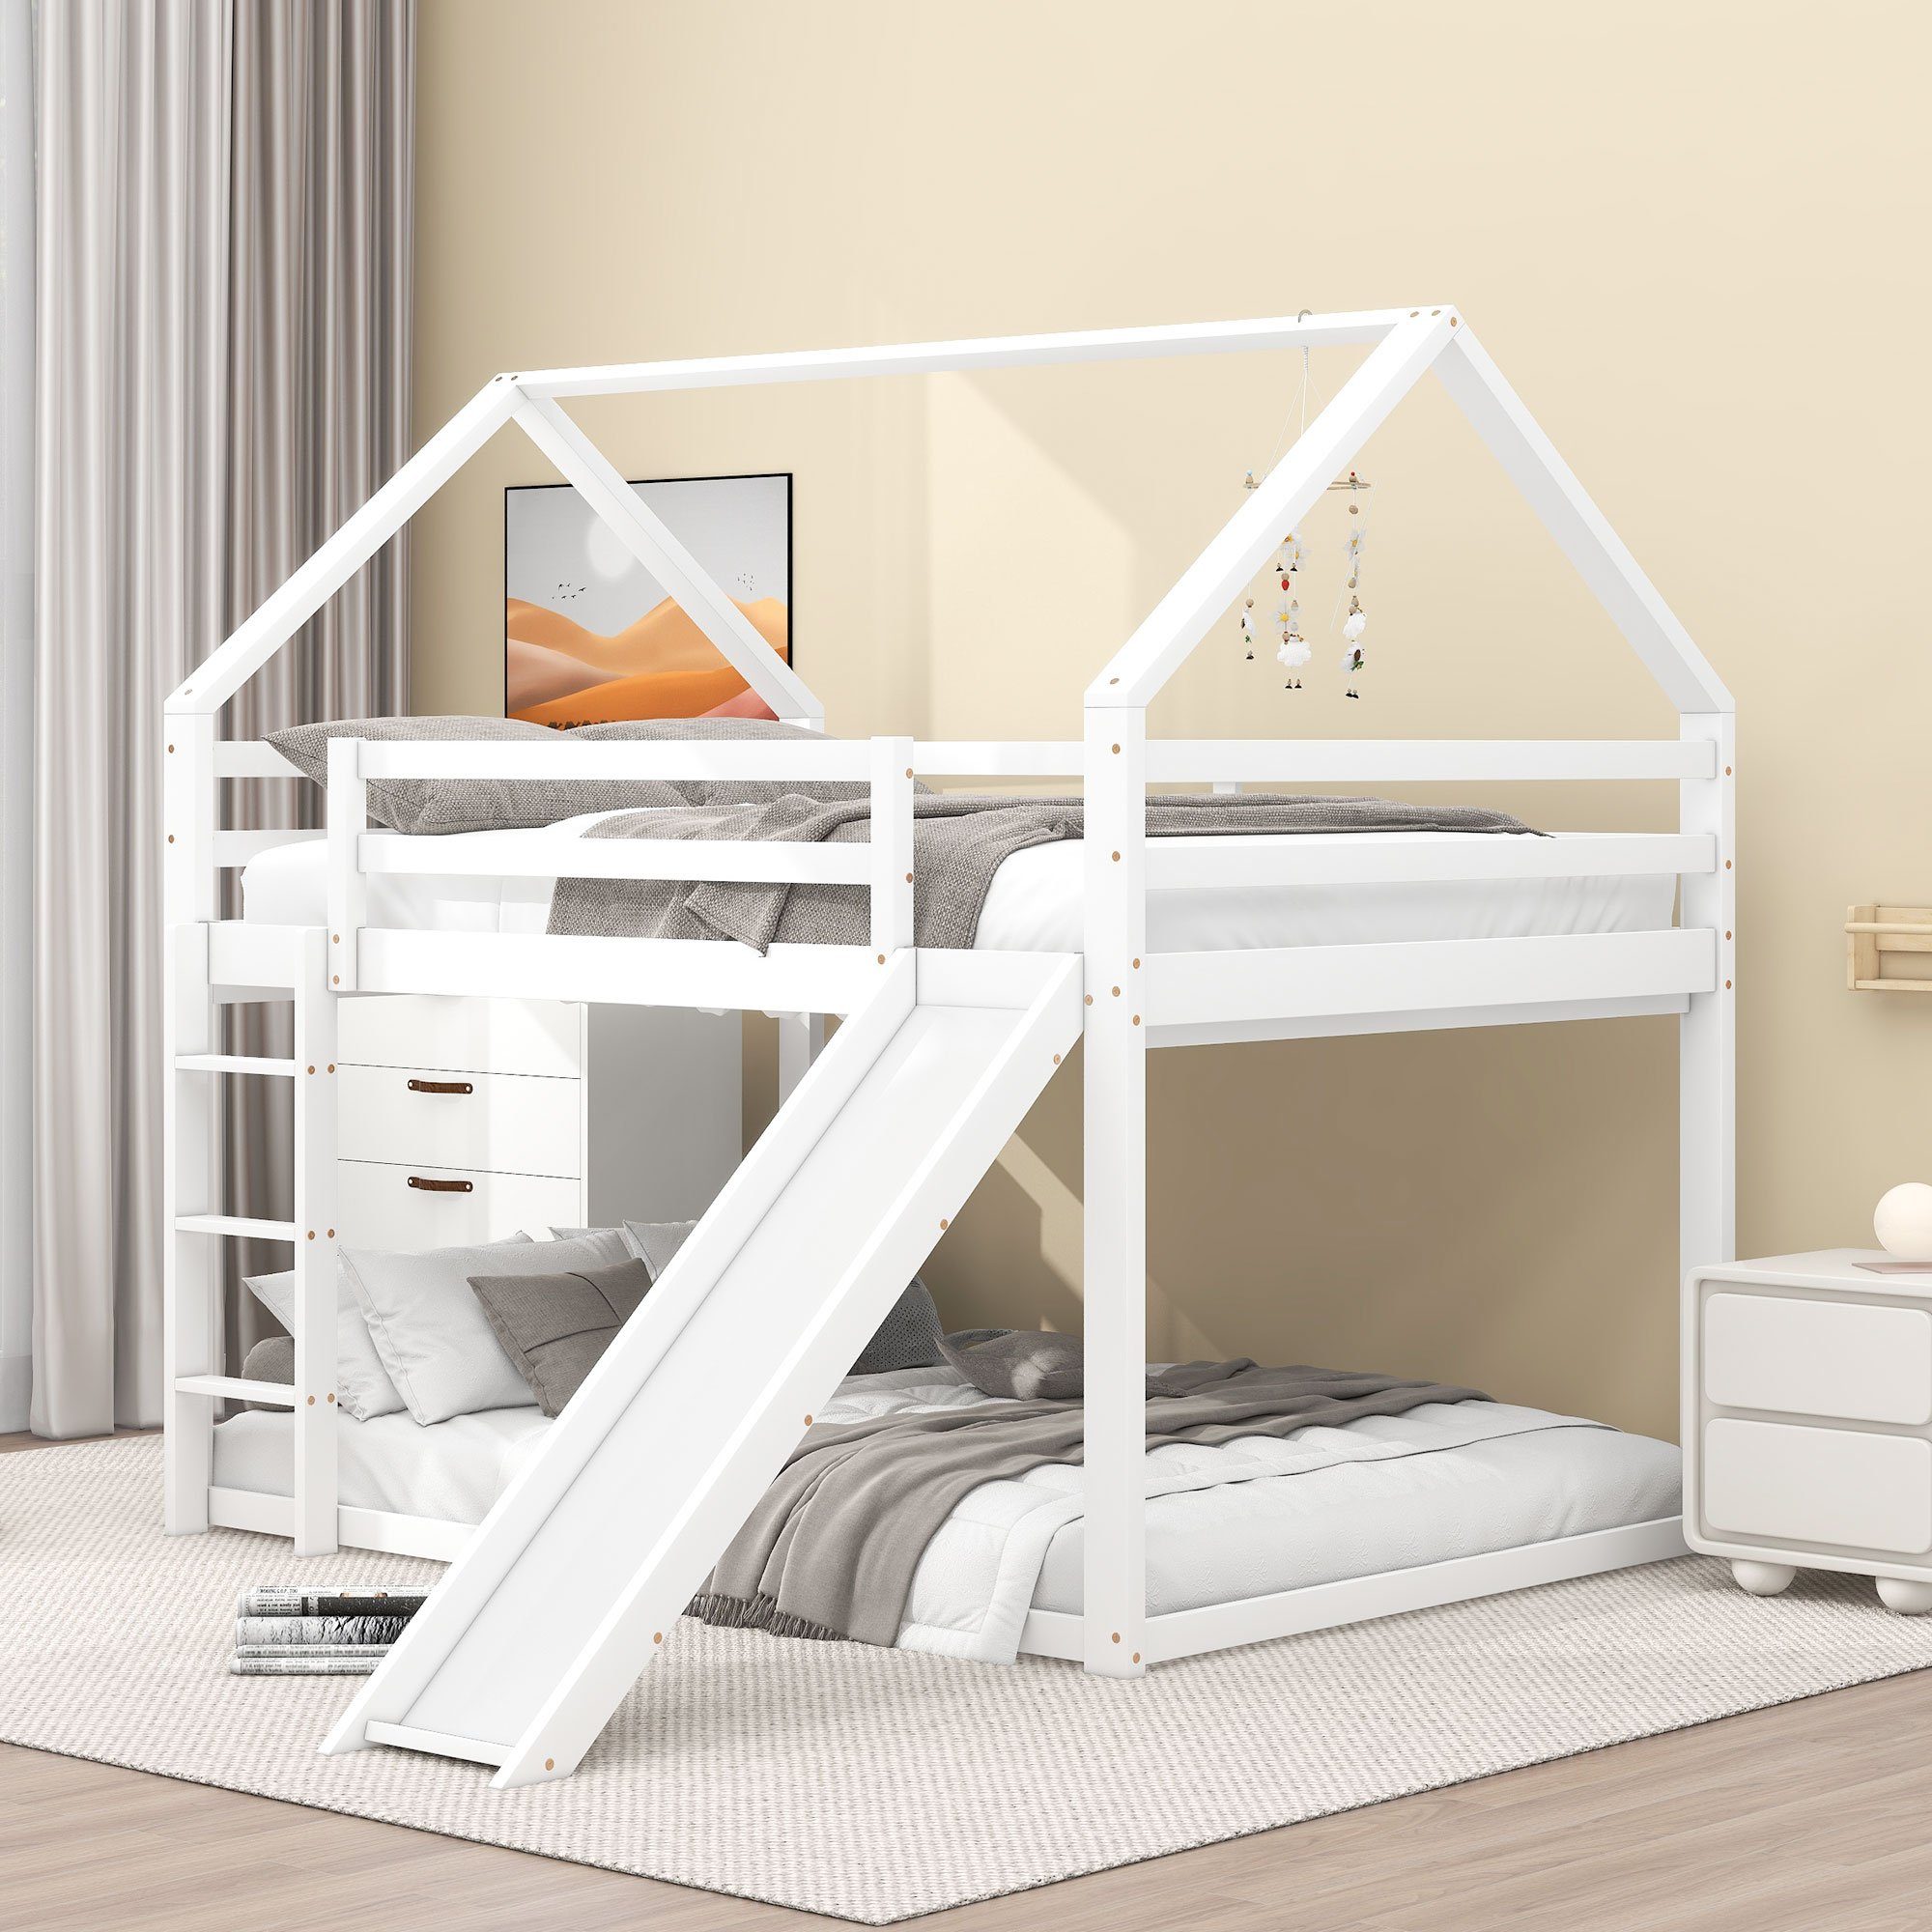 Flieks Hochbett Doppelbett Lattenrost Etagenbett mit Kinderbett 140x200cm oberem weiß